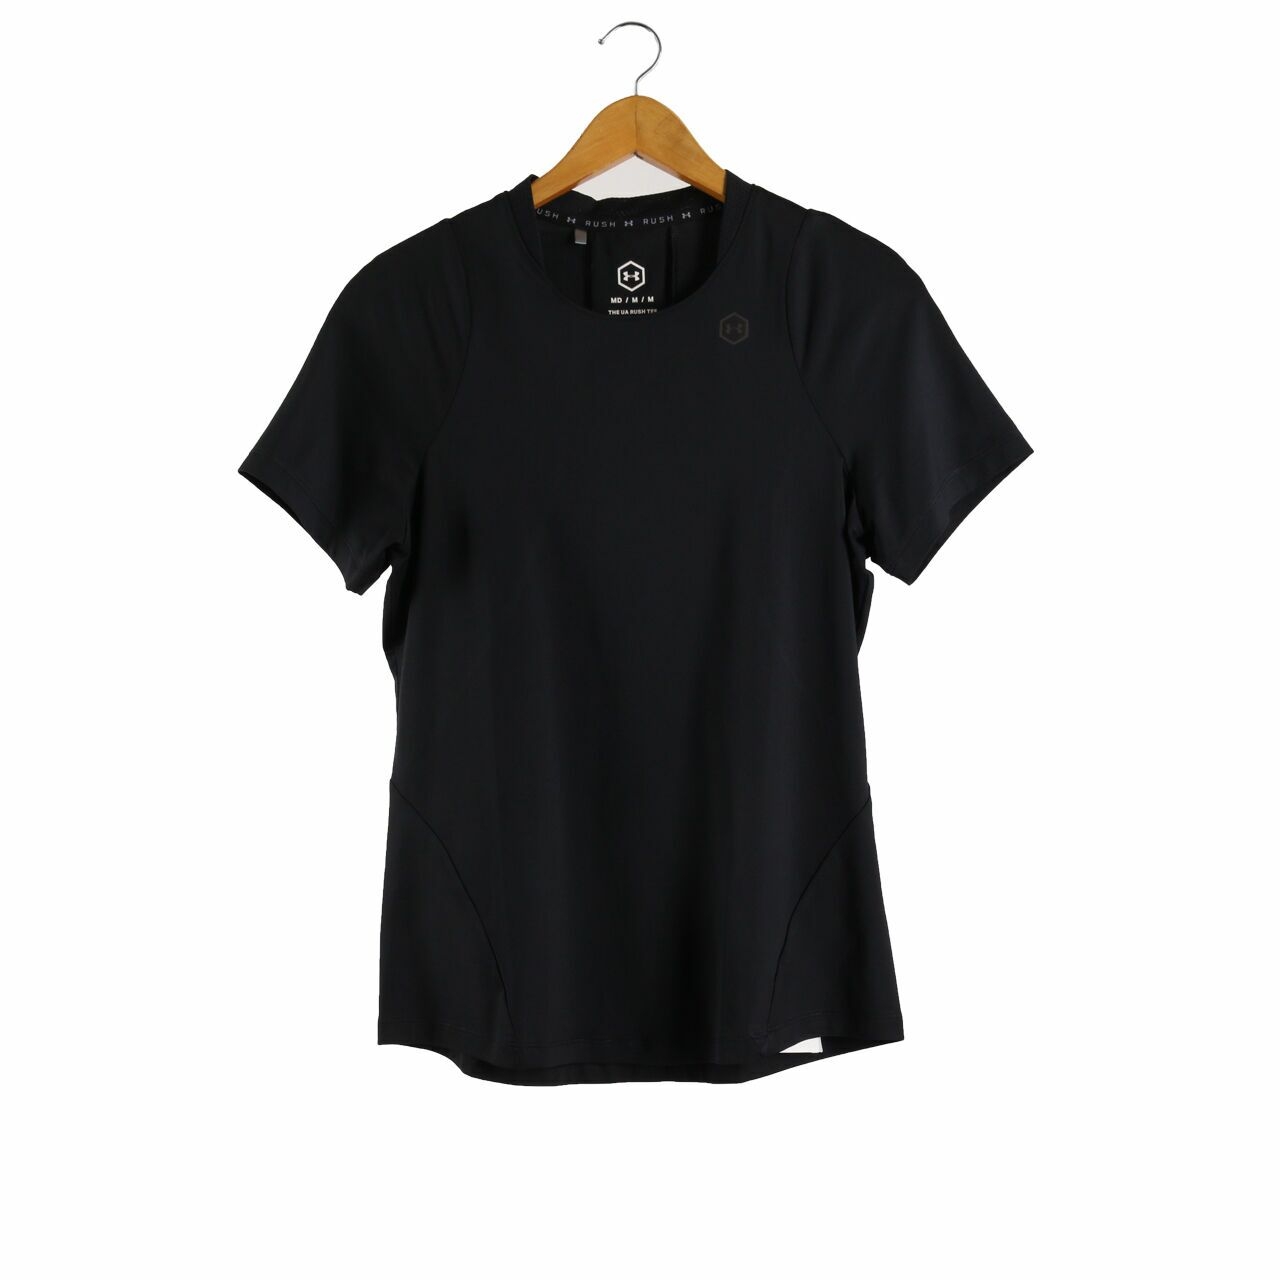 Under Armour Black T-Shirt Sport